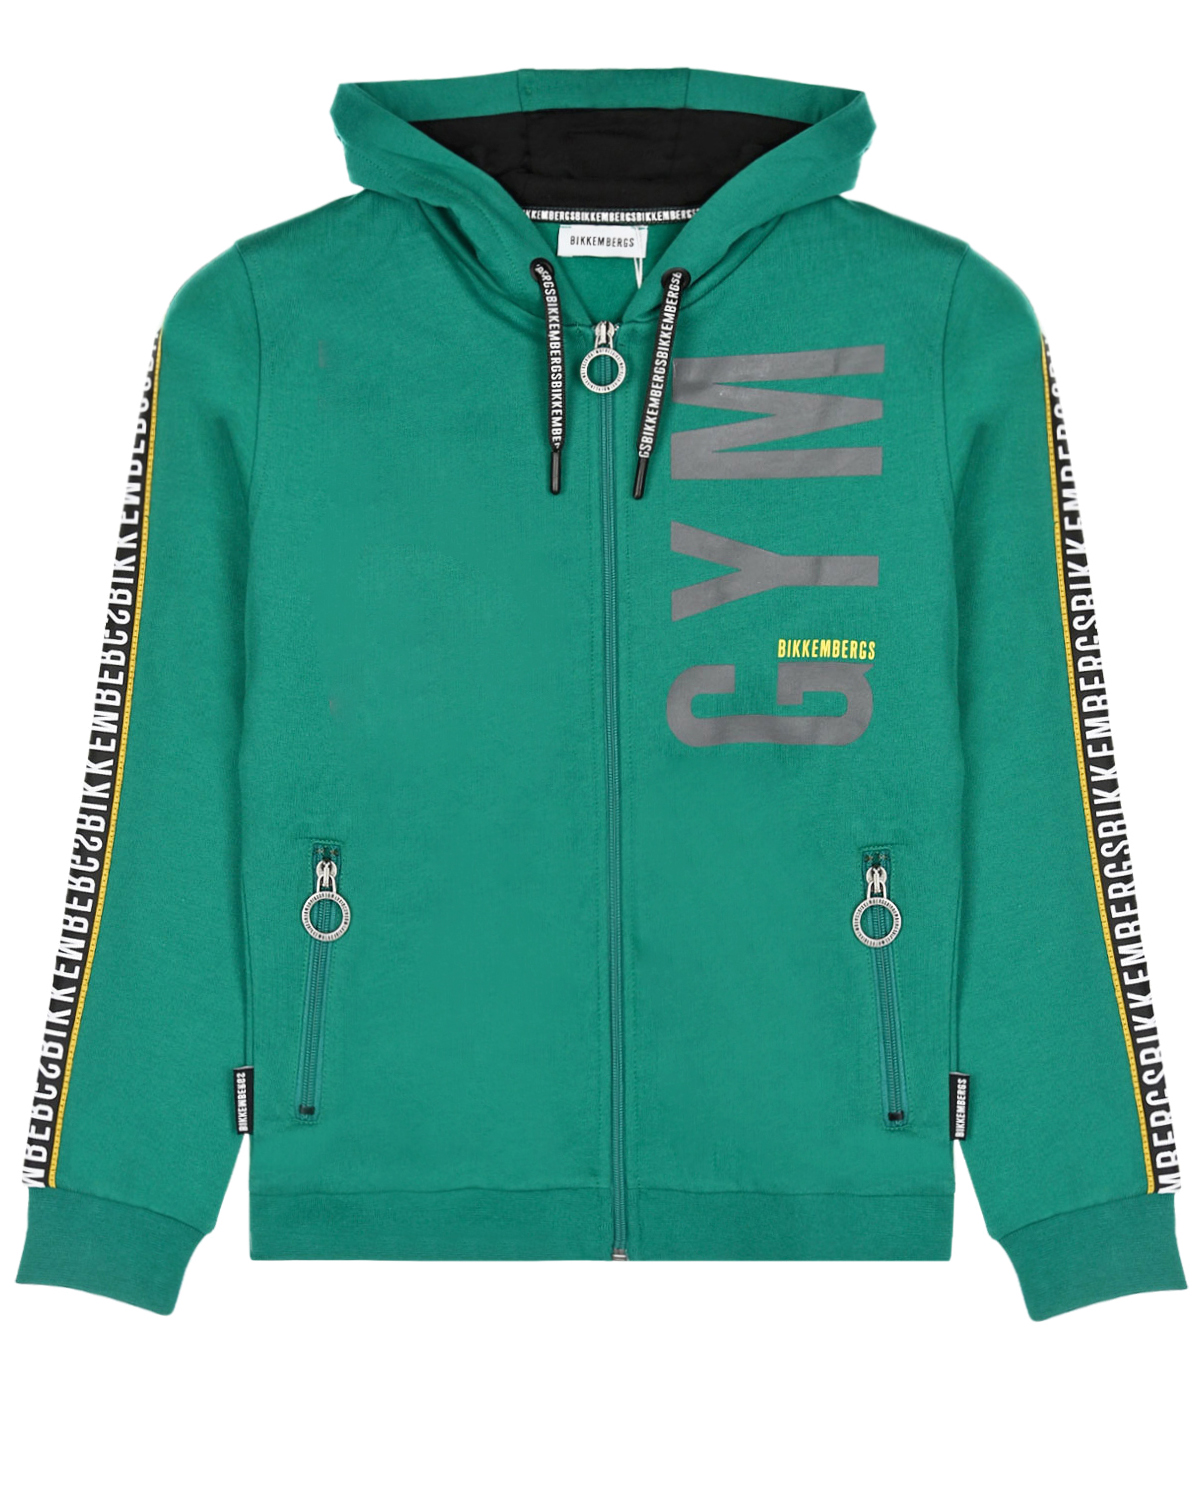 Зеленая спортивная куртка с лампасами Bikkembergs детская, размер 116, цвет зеленый